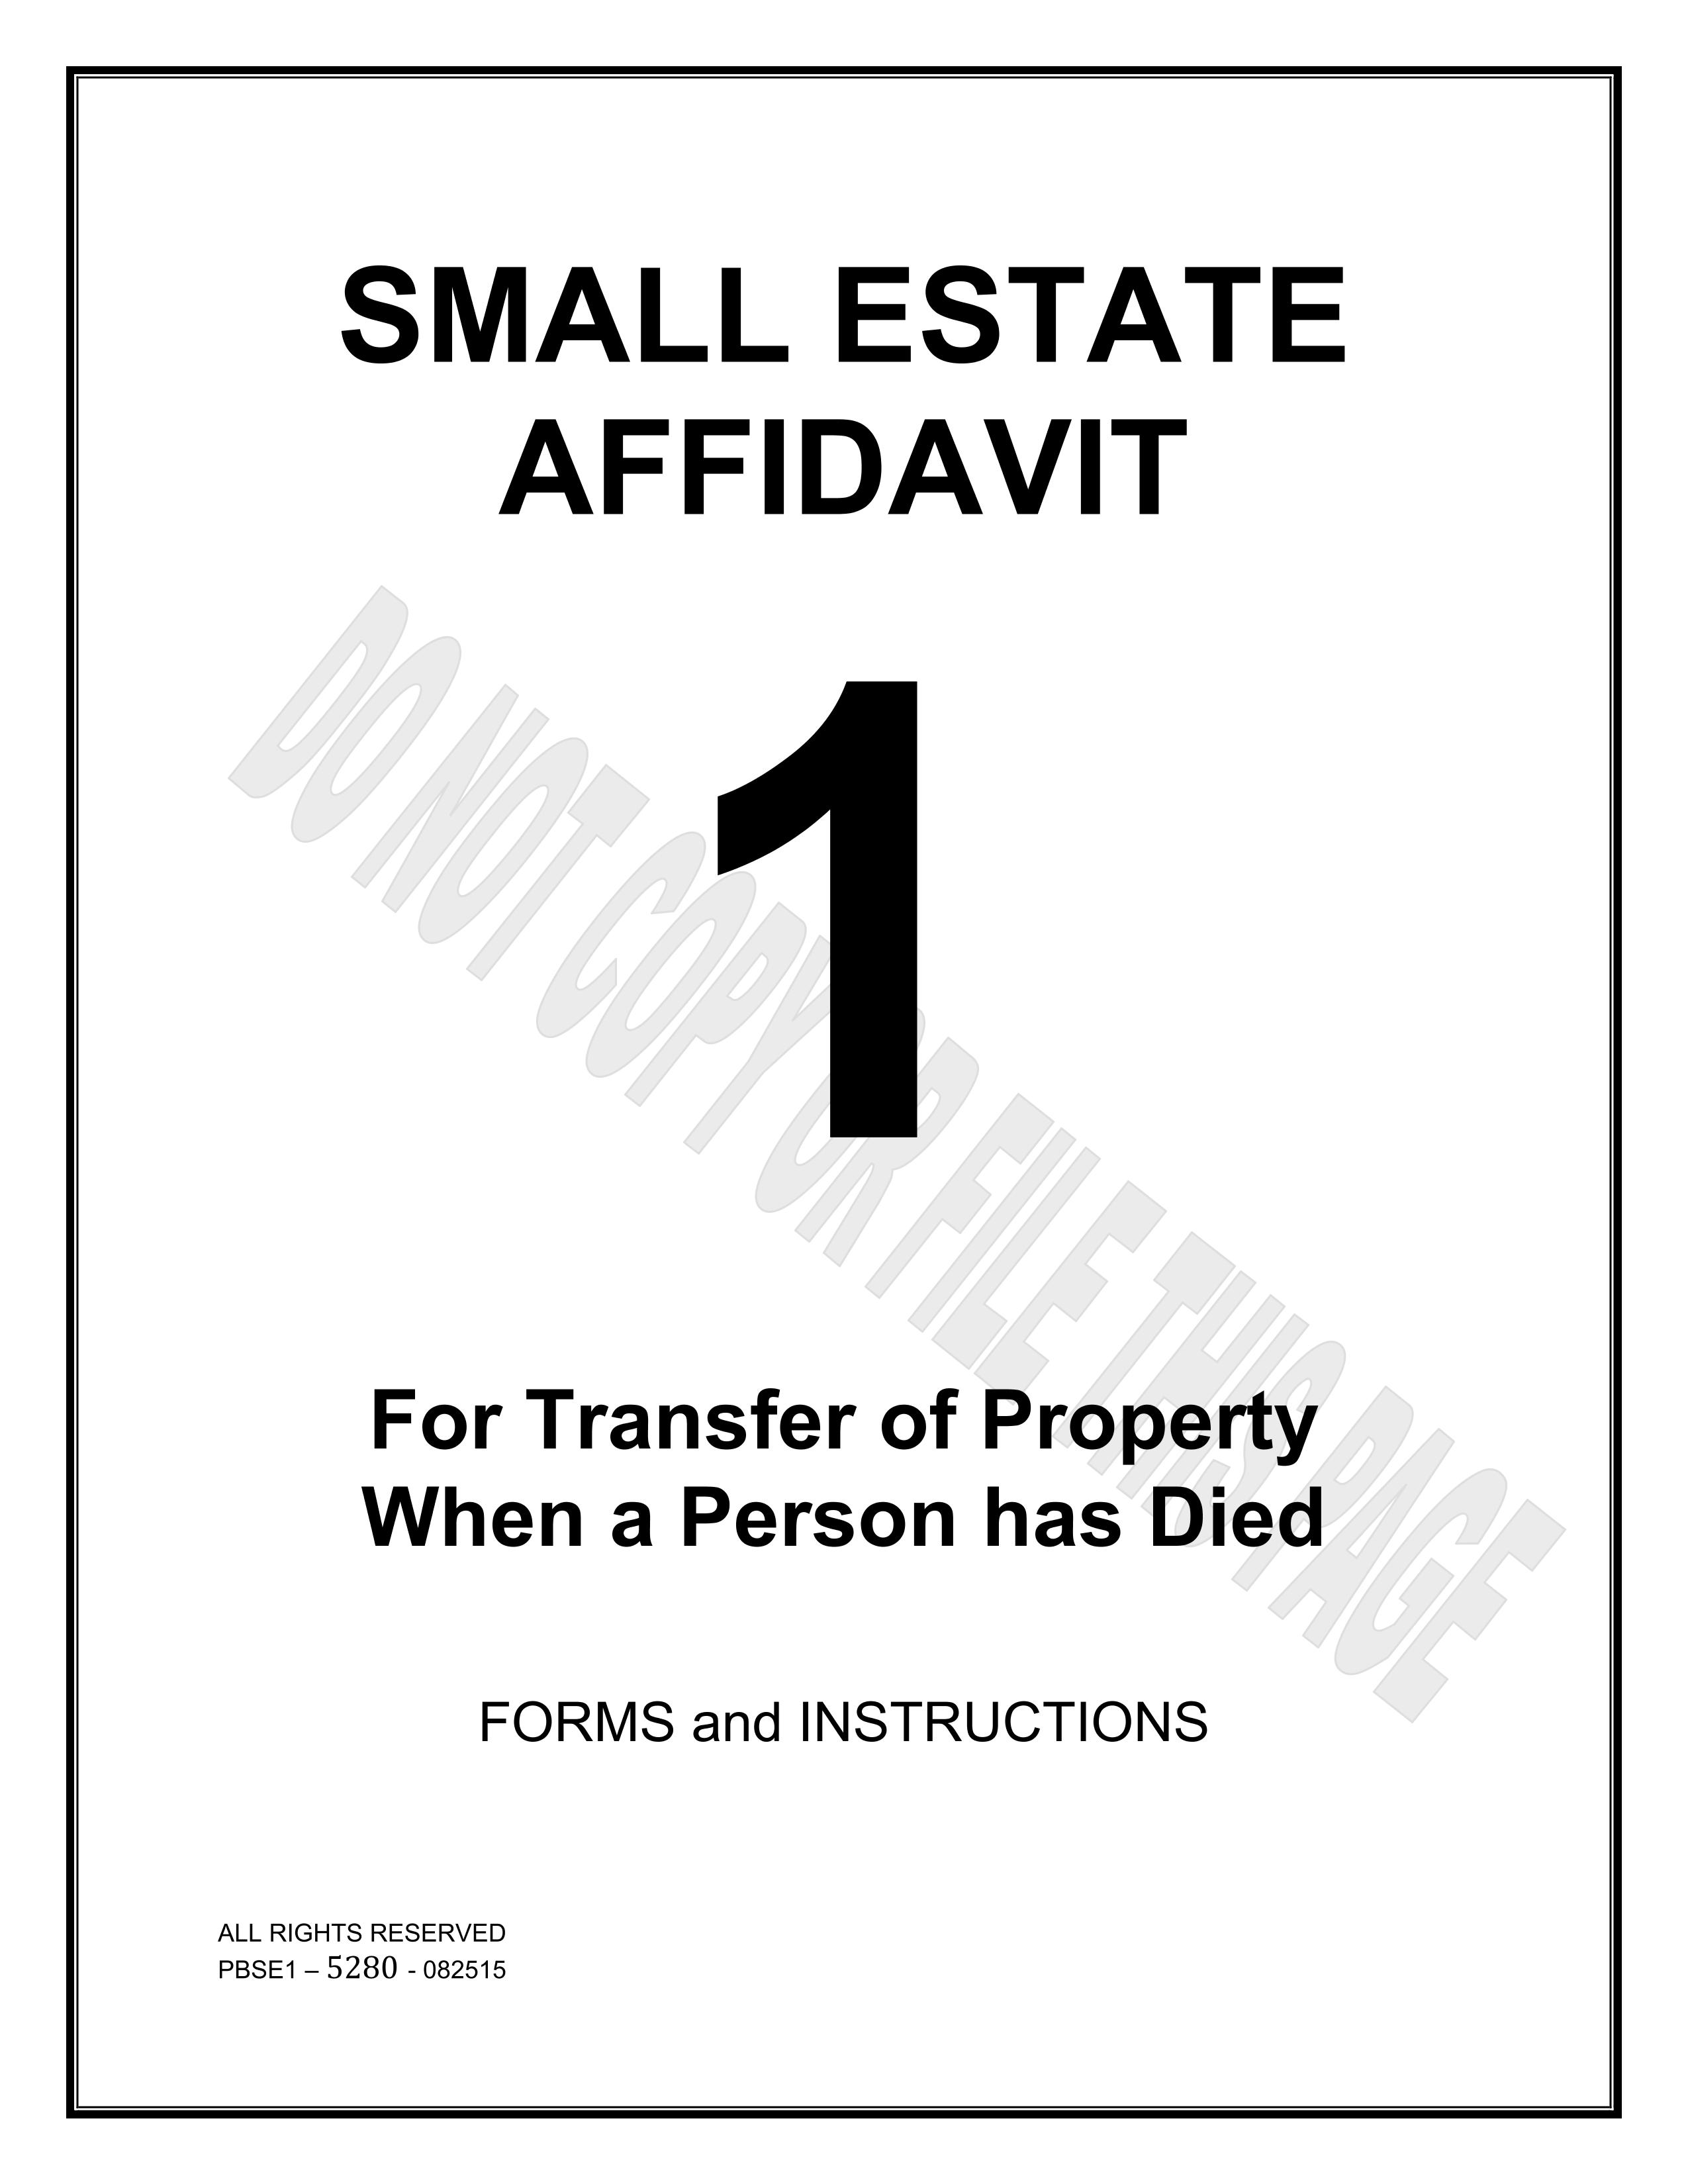 Arizona Small Estate Affidavit Template